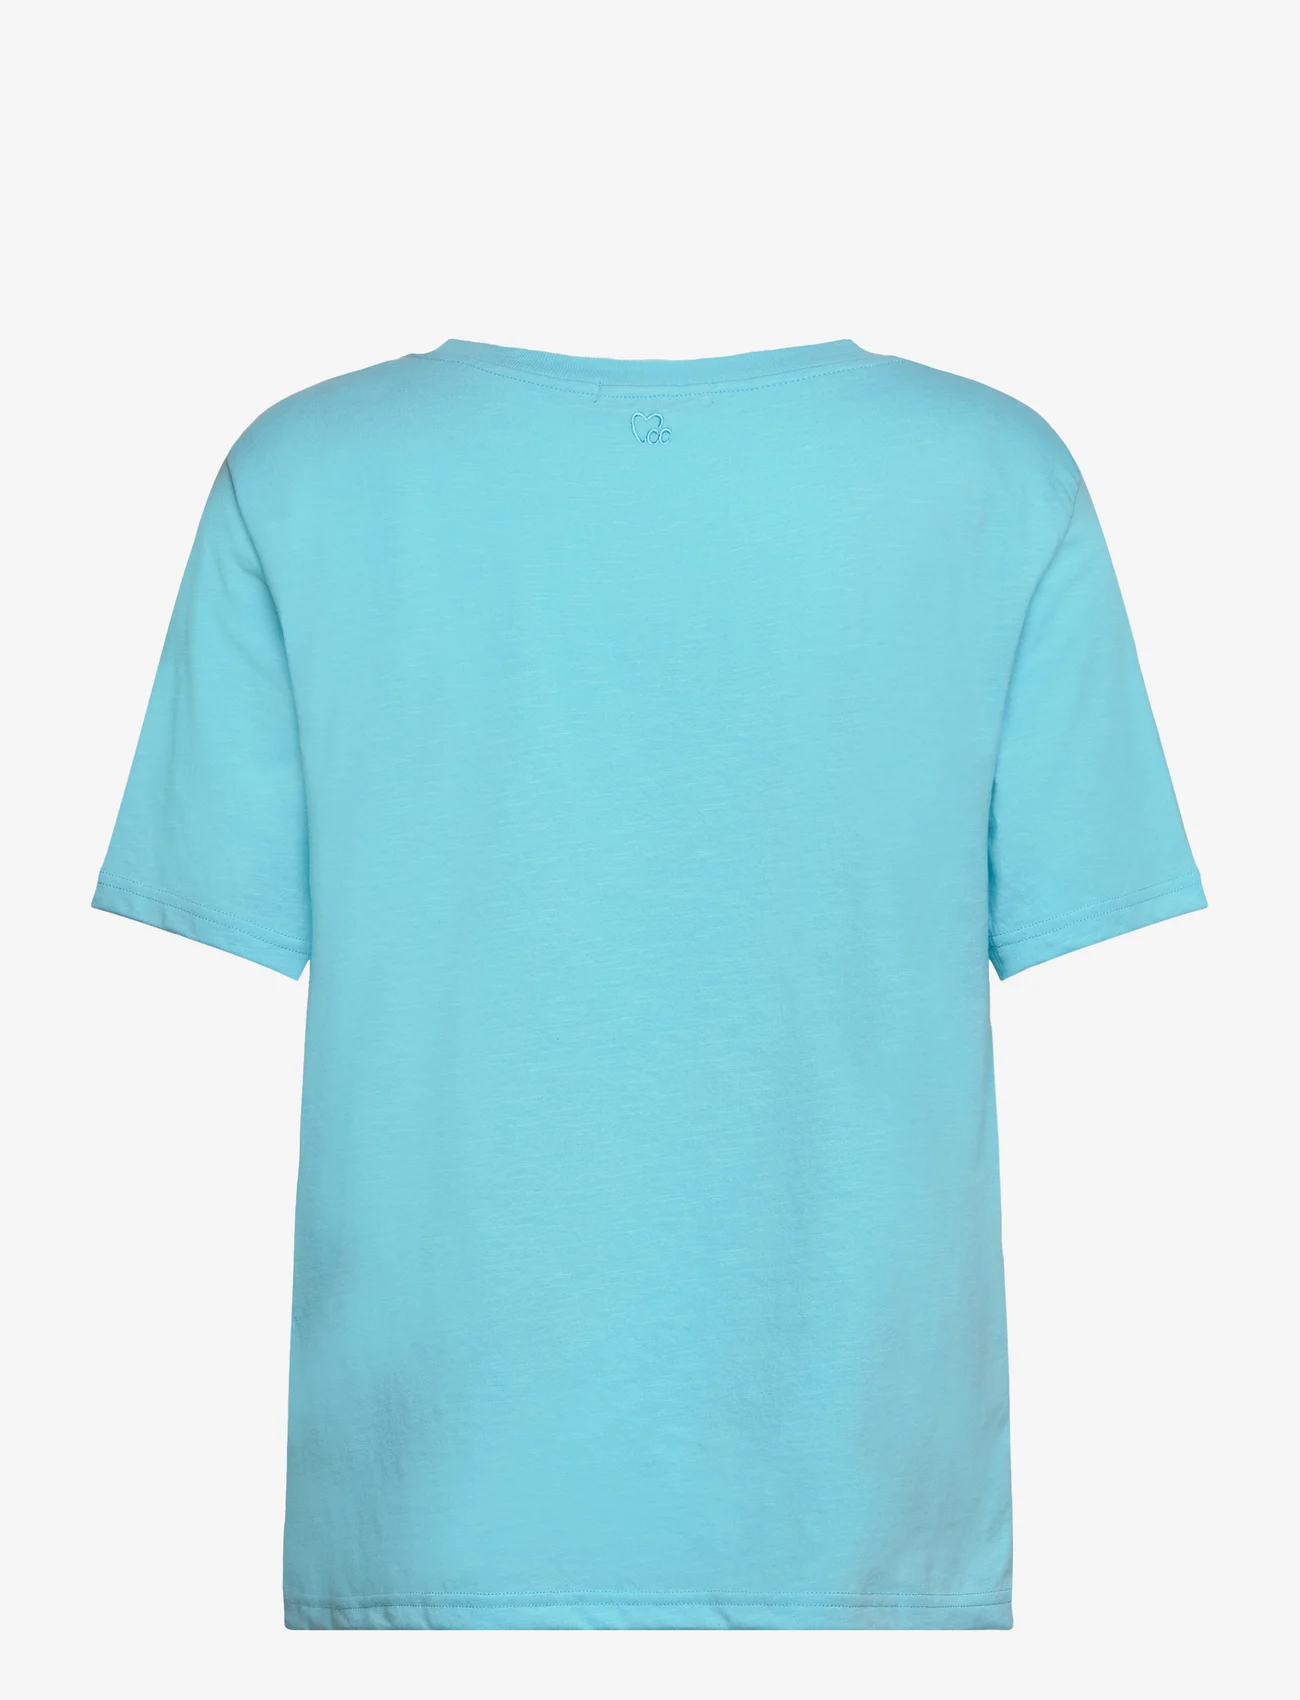 Coster Copenhagen - CC Heart regular t-shirt - laagste prijzen - aqua blue - 1